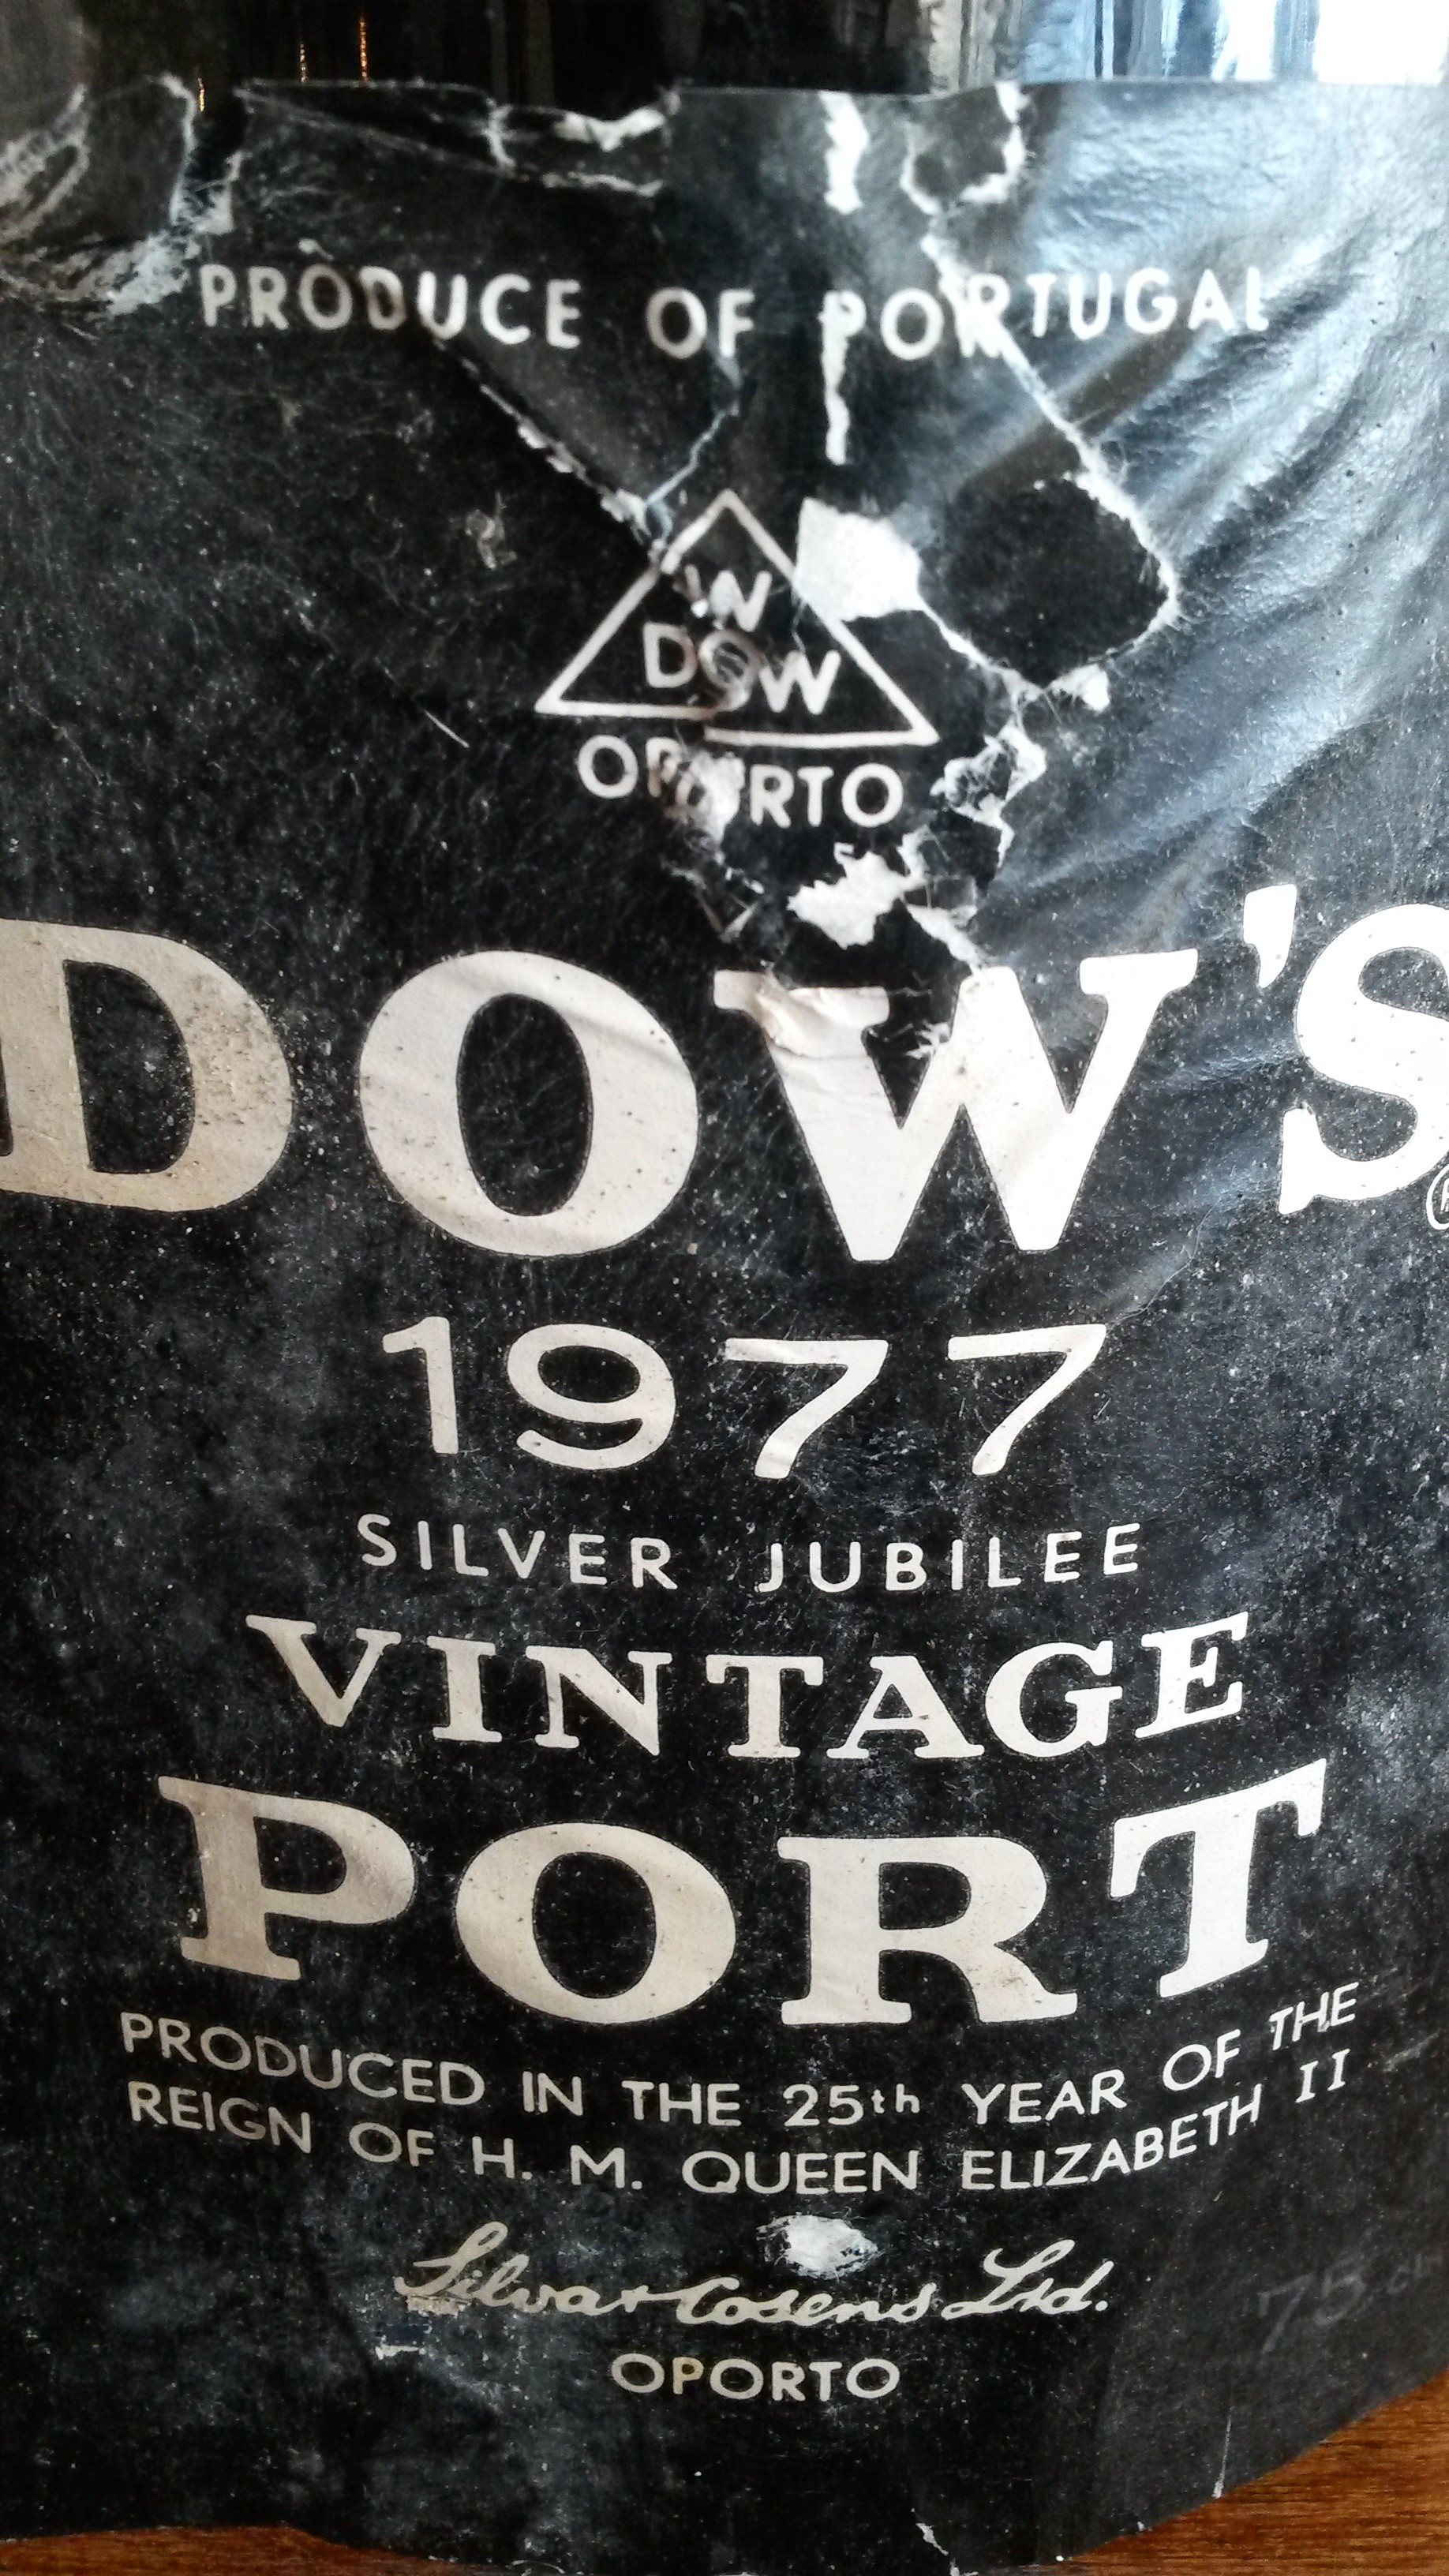 Dow vintage 1977